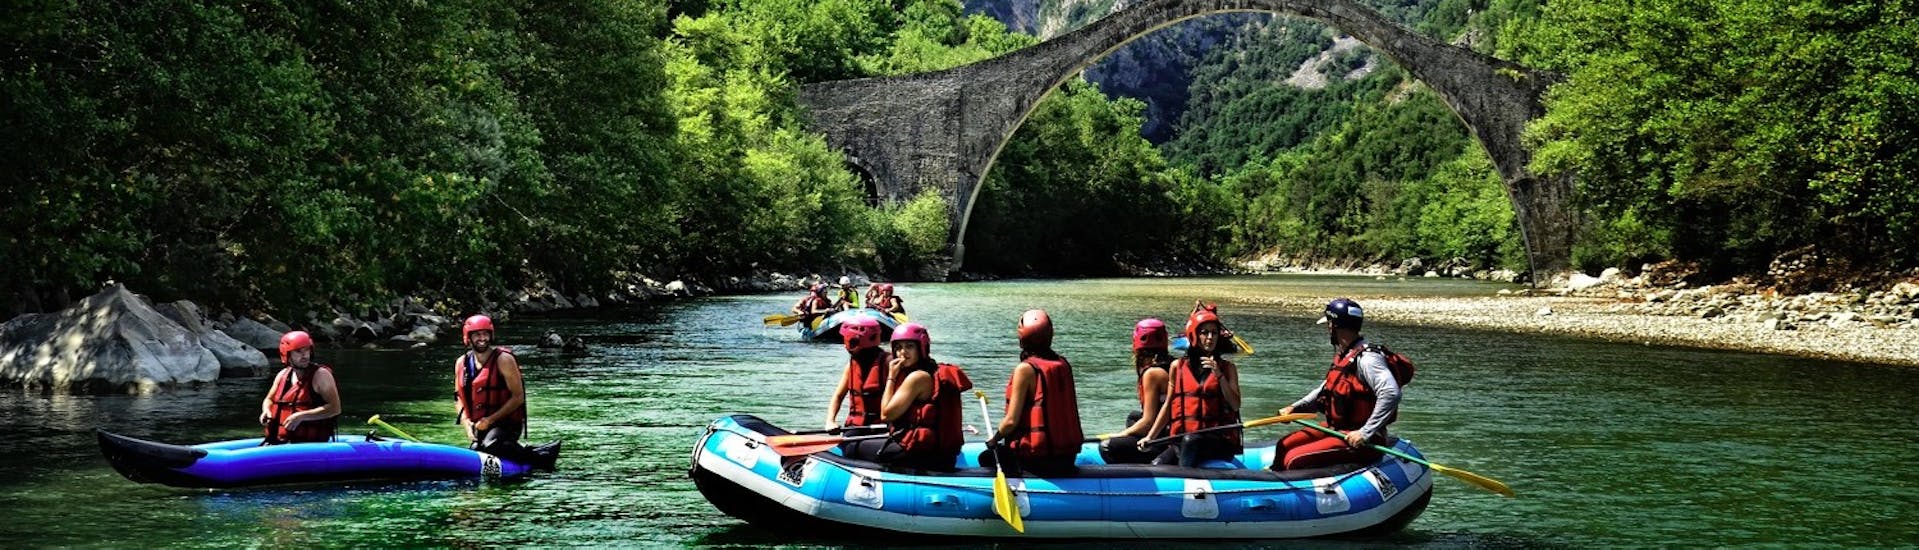 Rafting on the Arachthos Potamos River starting from Politsa’s Bridge.